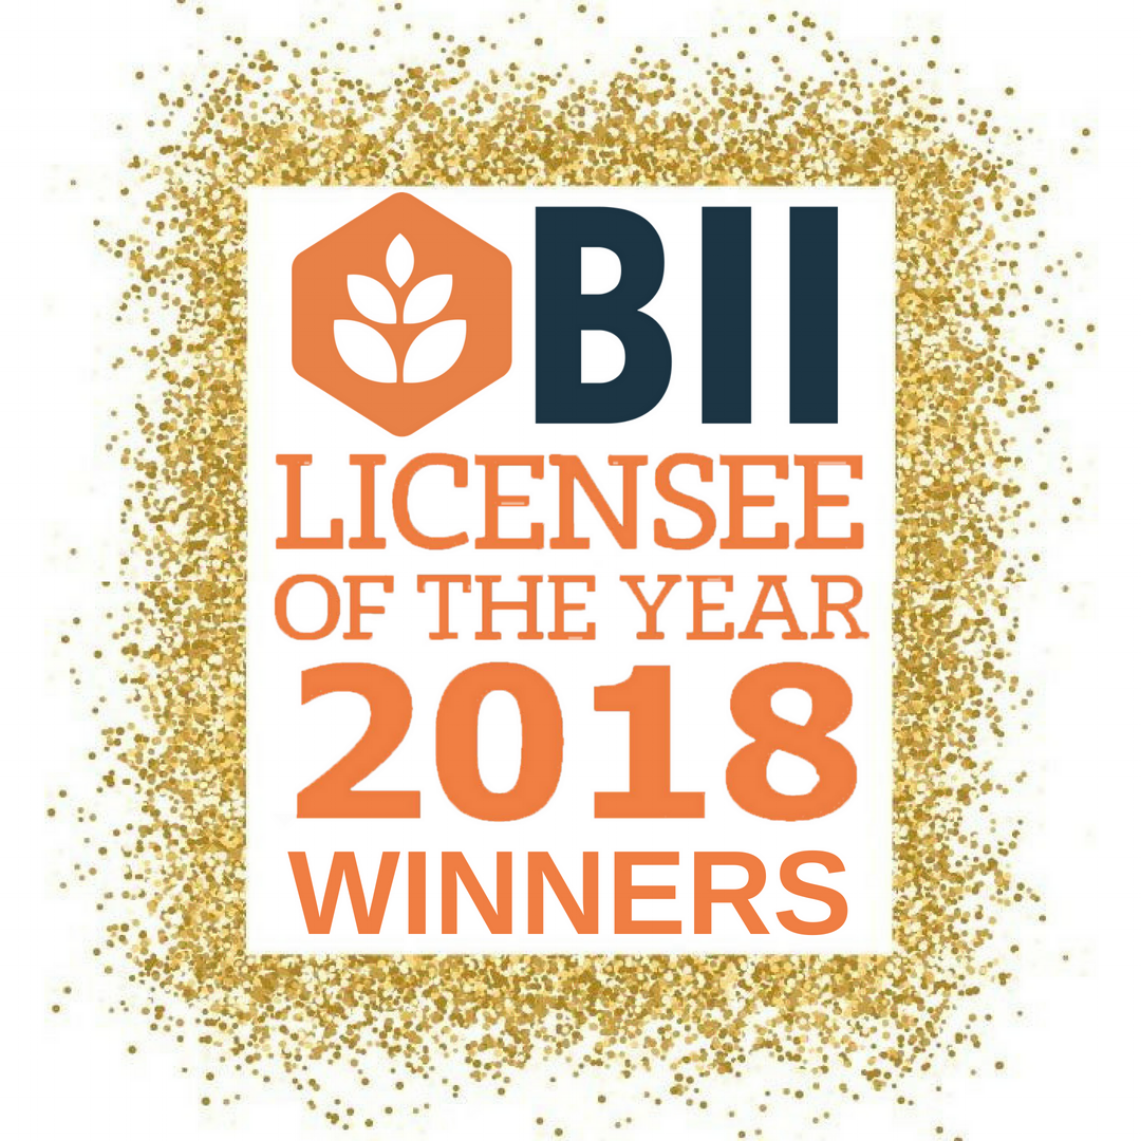 licensees of the Year winners.jpg.png